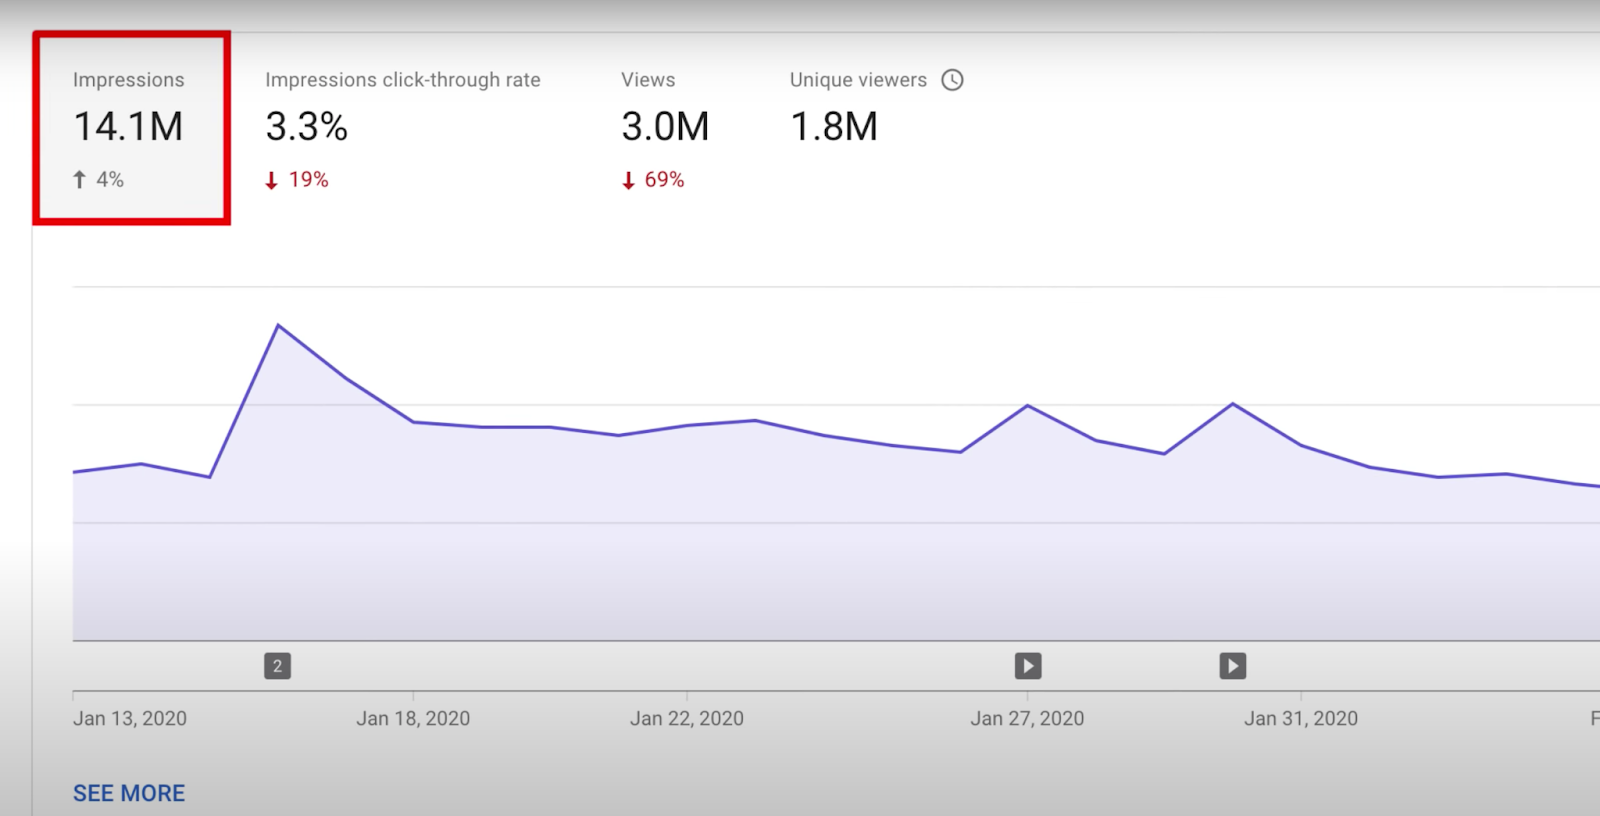 YouTube Analytics Metrics, Impressions and Impressions Click-through Rates